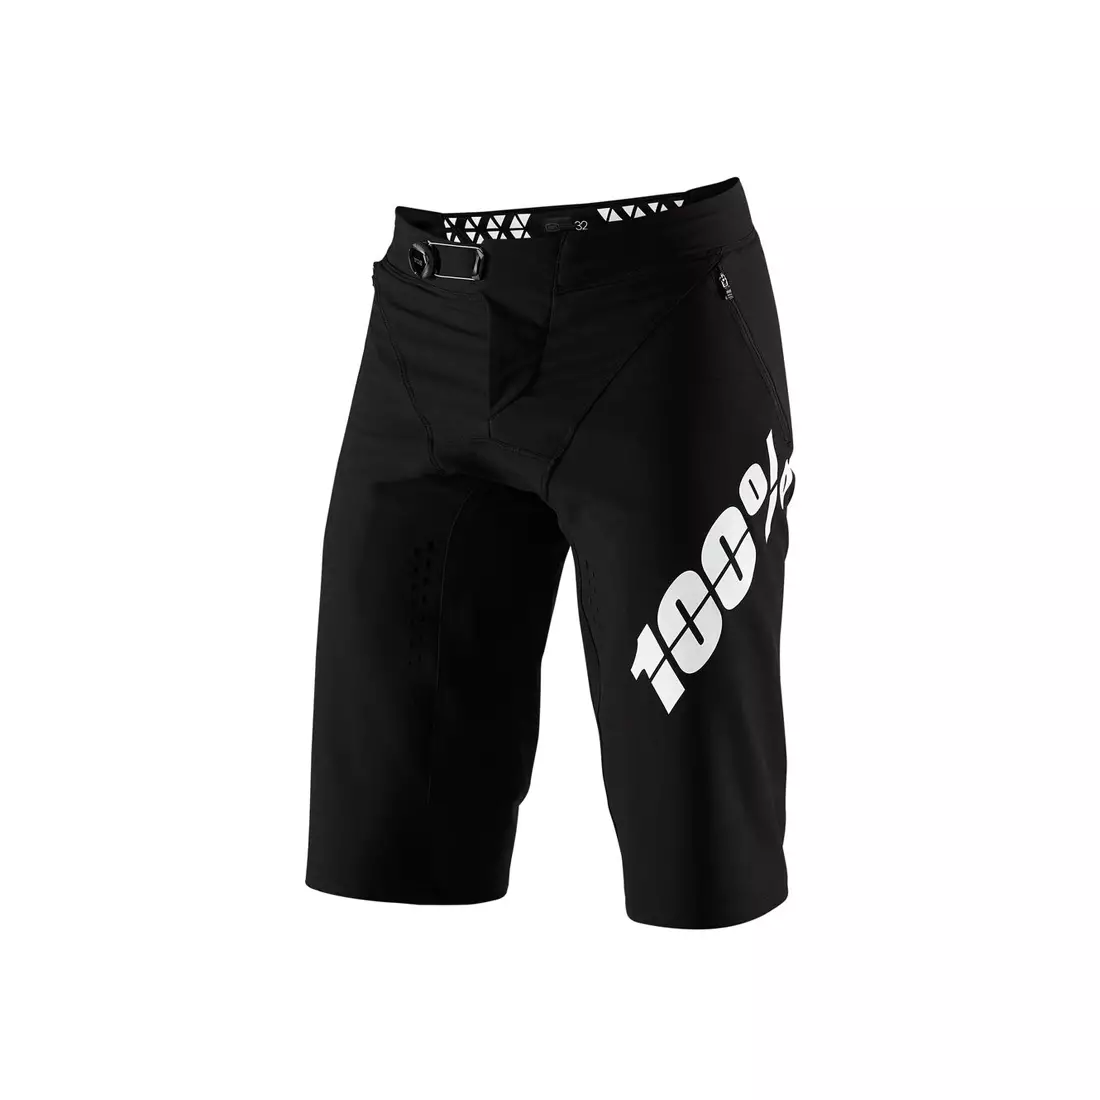 100% men's cycling shorts r-core x black STO-42002-001-38